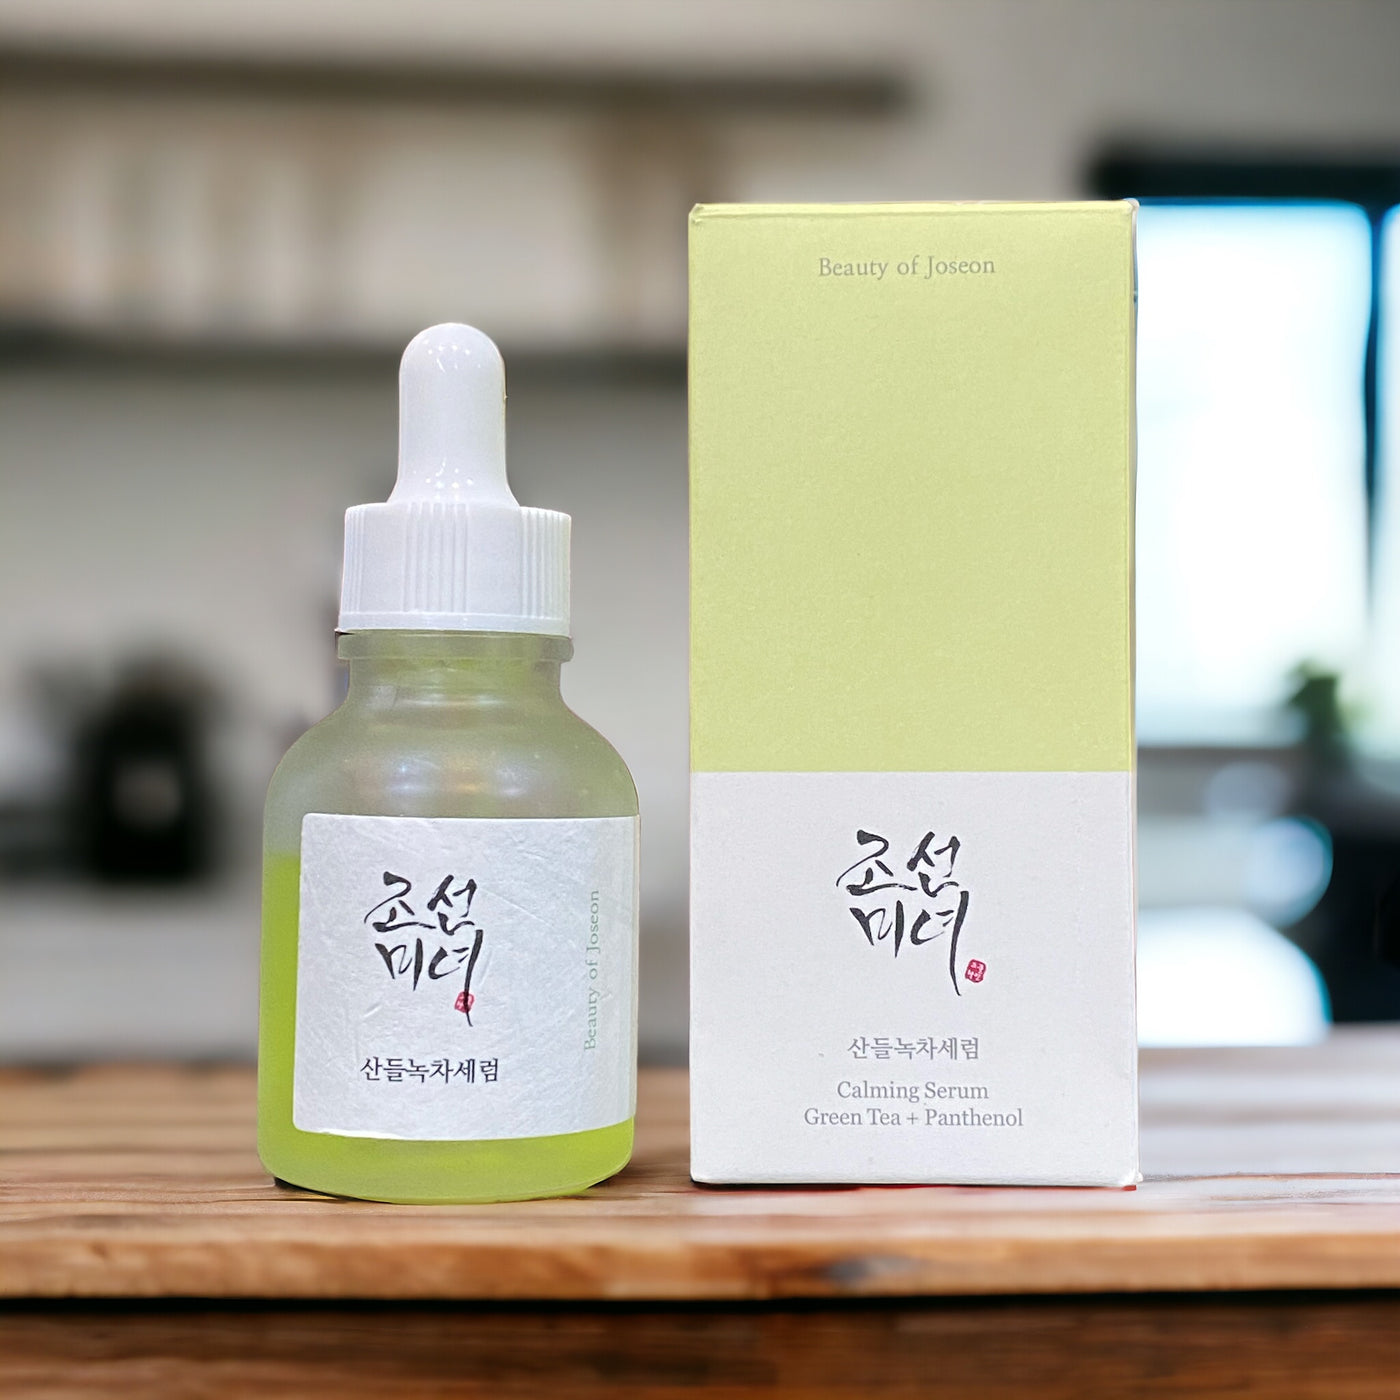 Beauty of Joseon Calming Serum Green Tea + Panthenol Serum